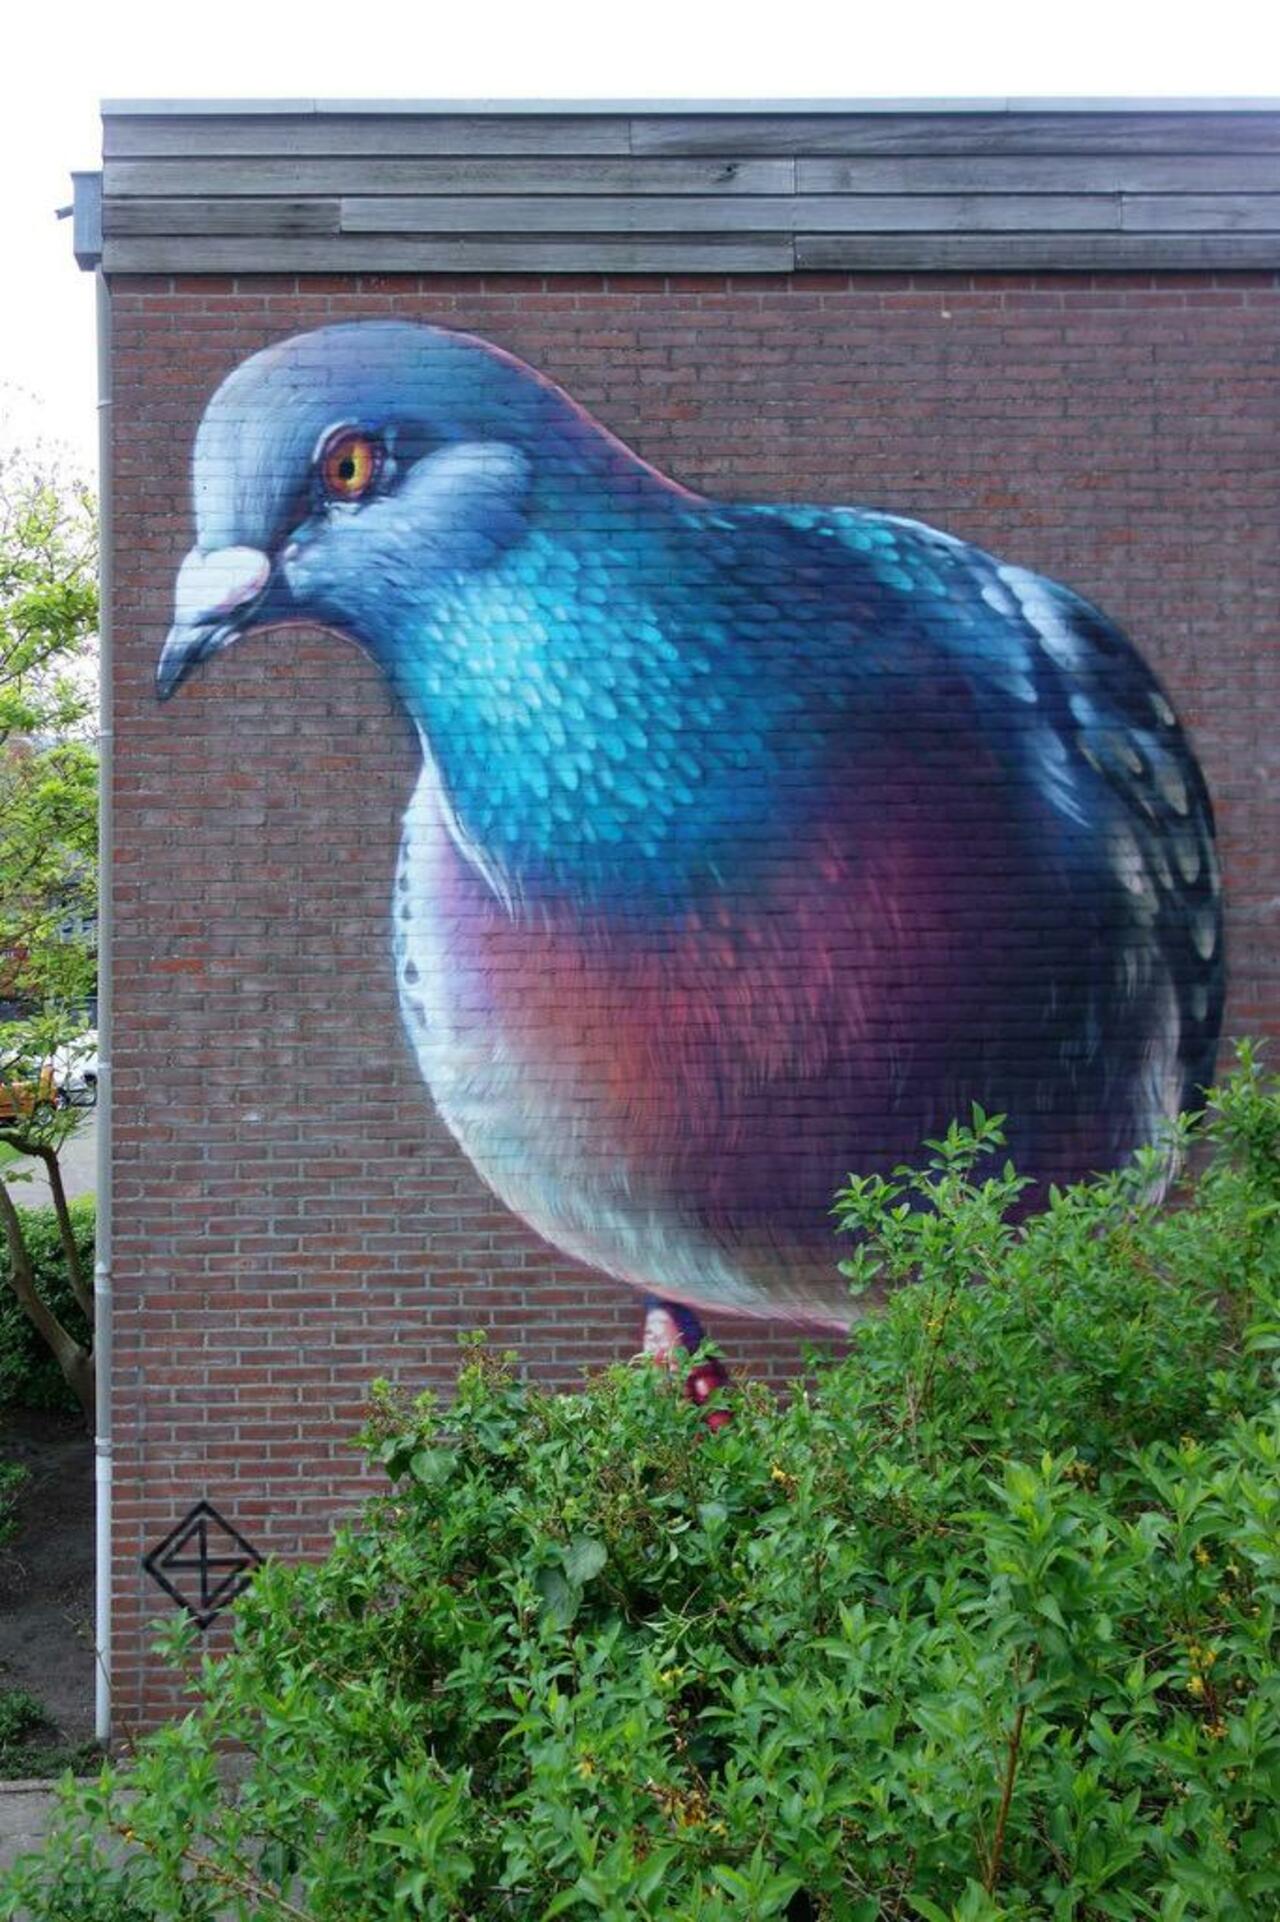 https://goo.gl/t4fpx2 RT GoogleStreetArt: Street Art by Super A 

#art #graffiti #mural #streetart http://t.co/4dxsUvOoG8